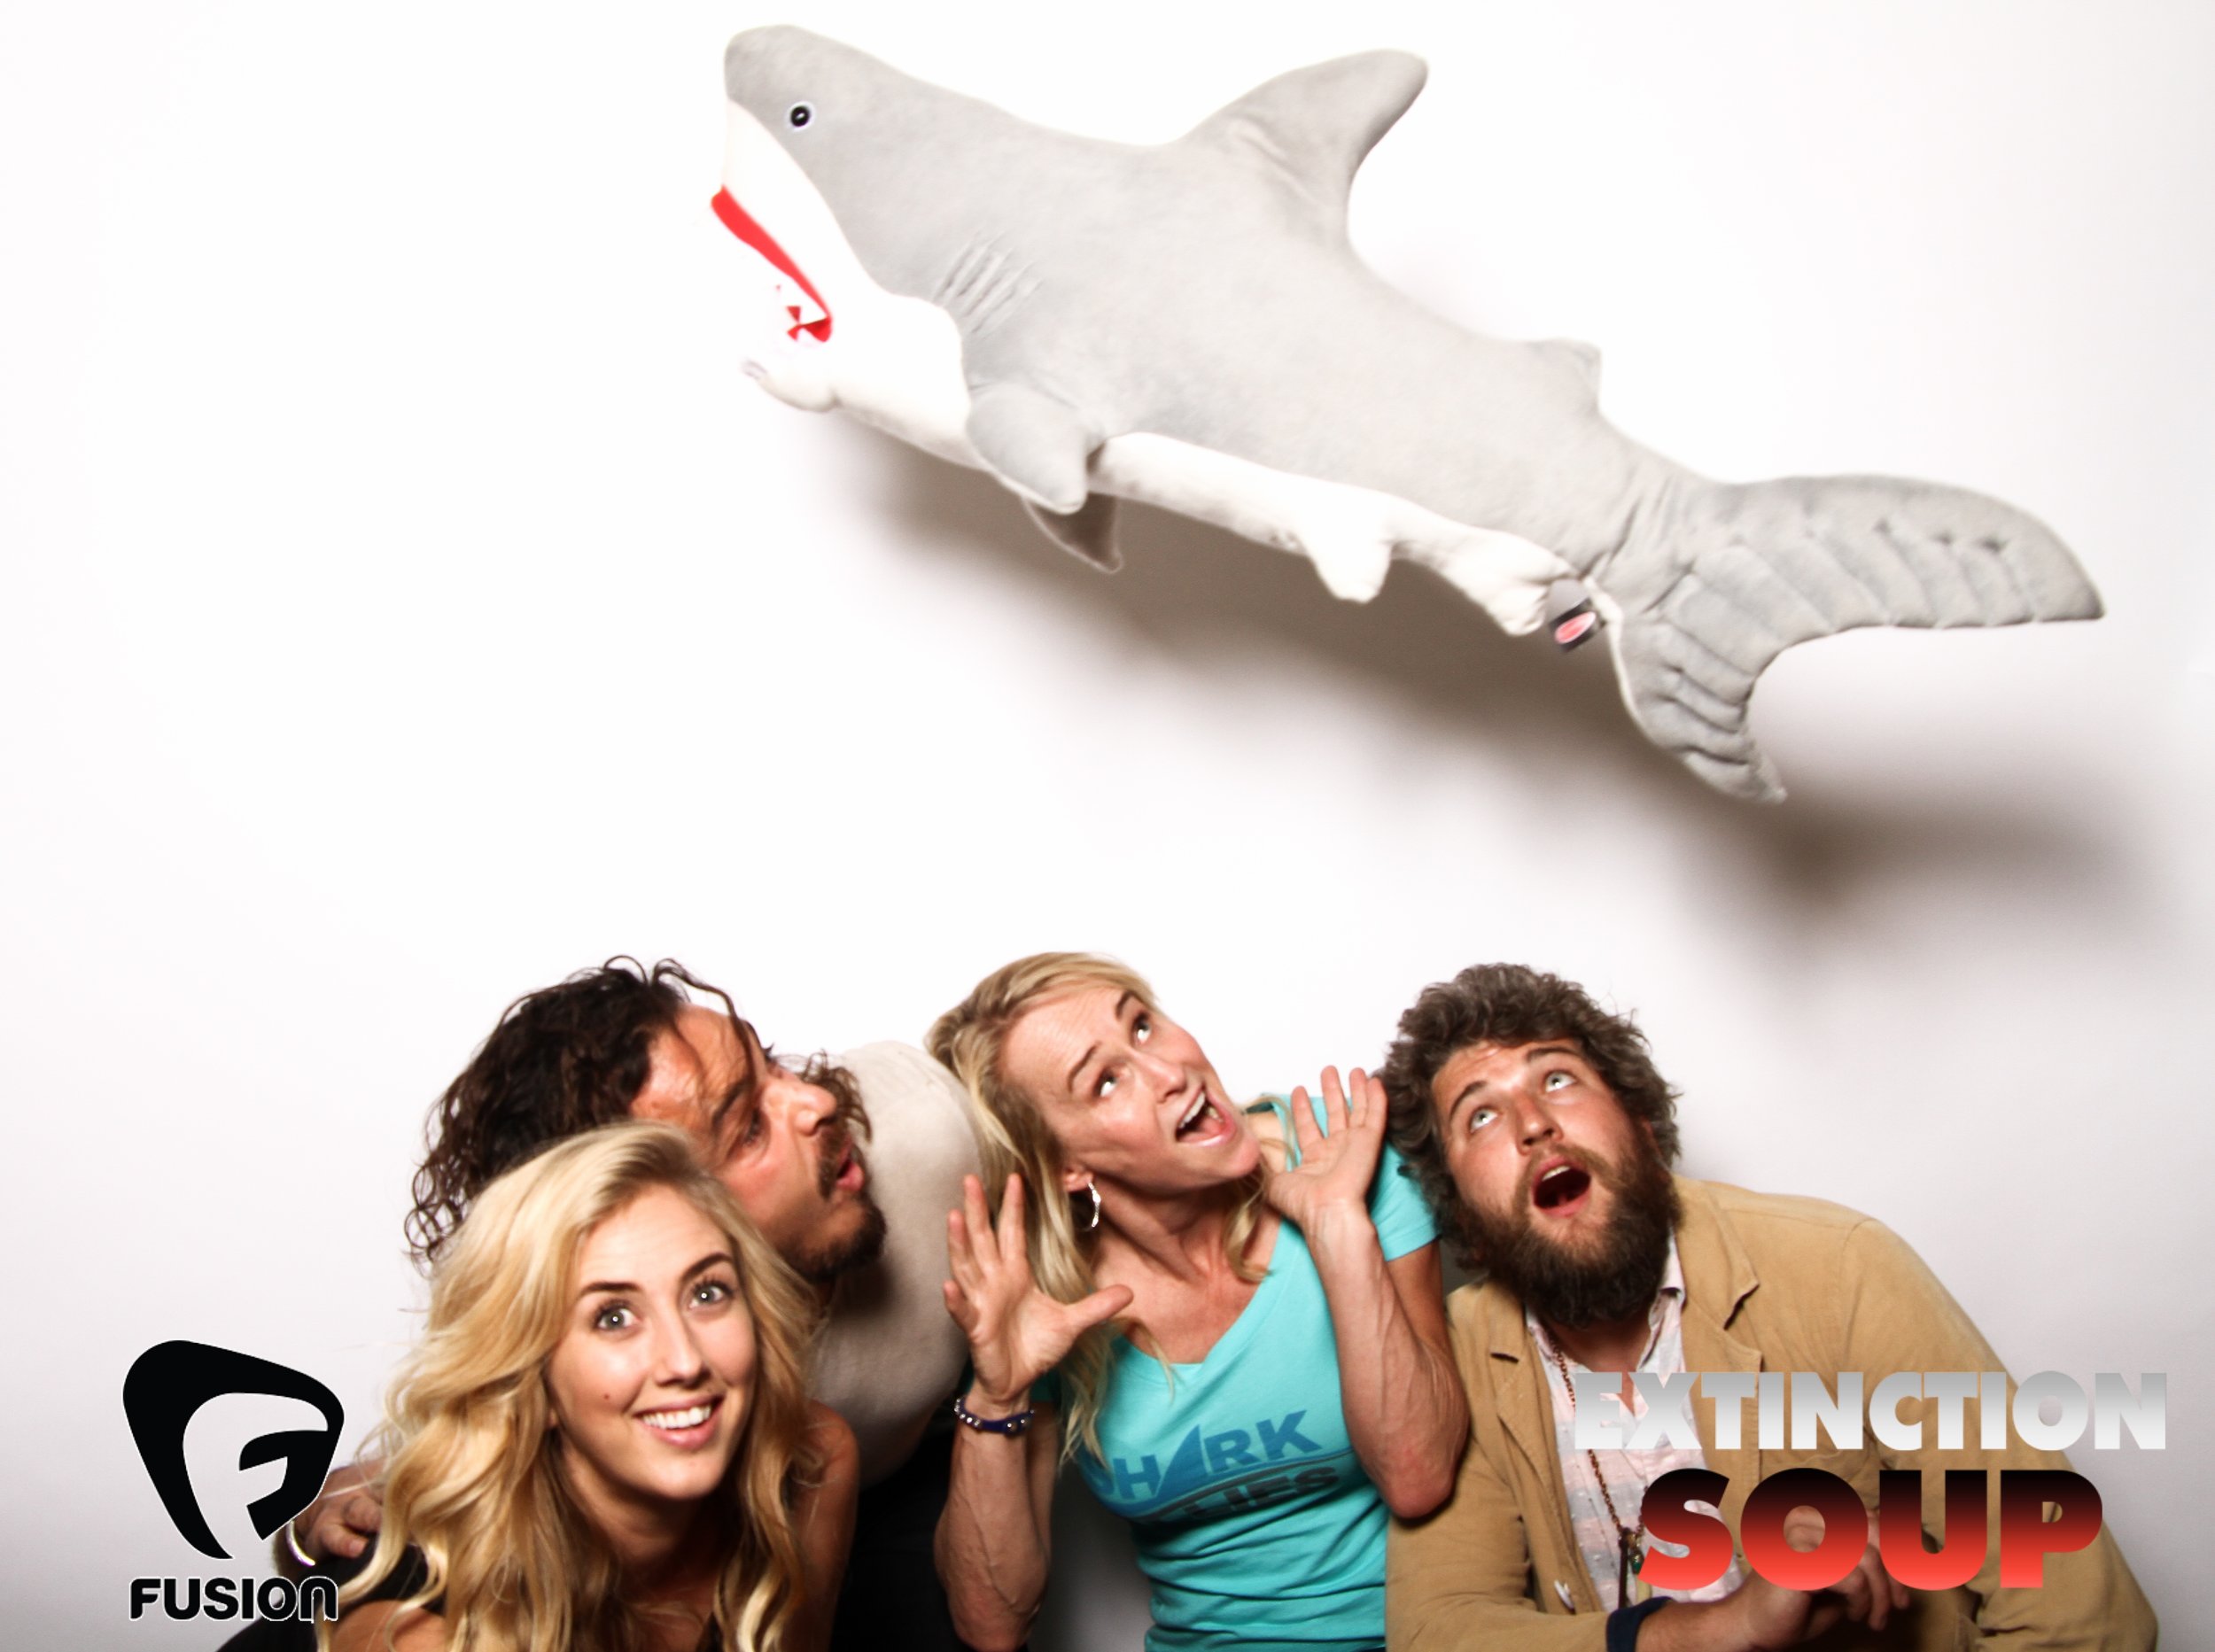 Photo booth fun with shark 1